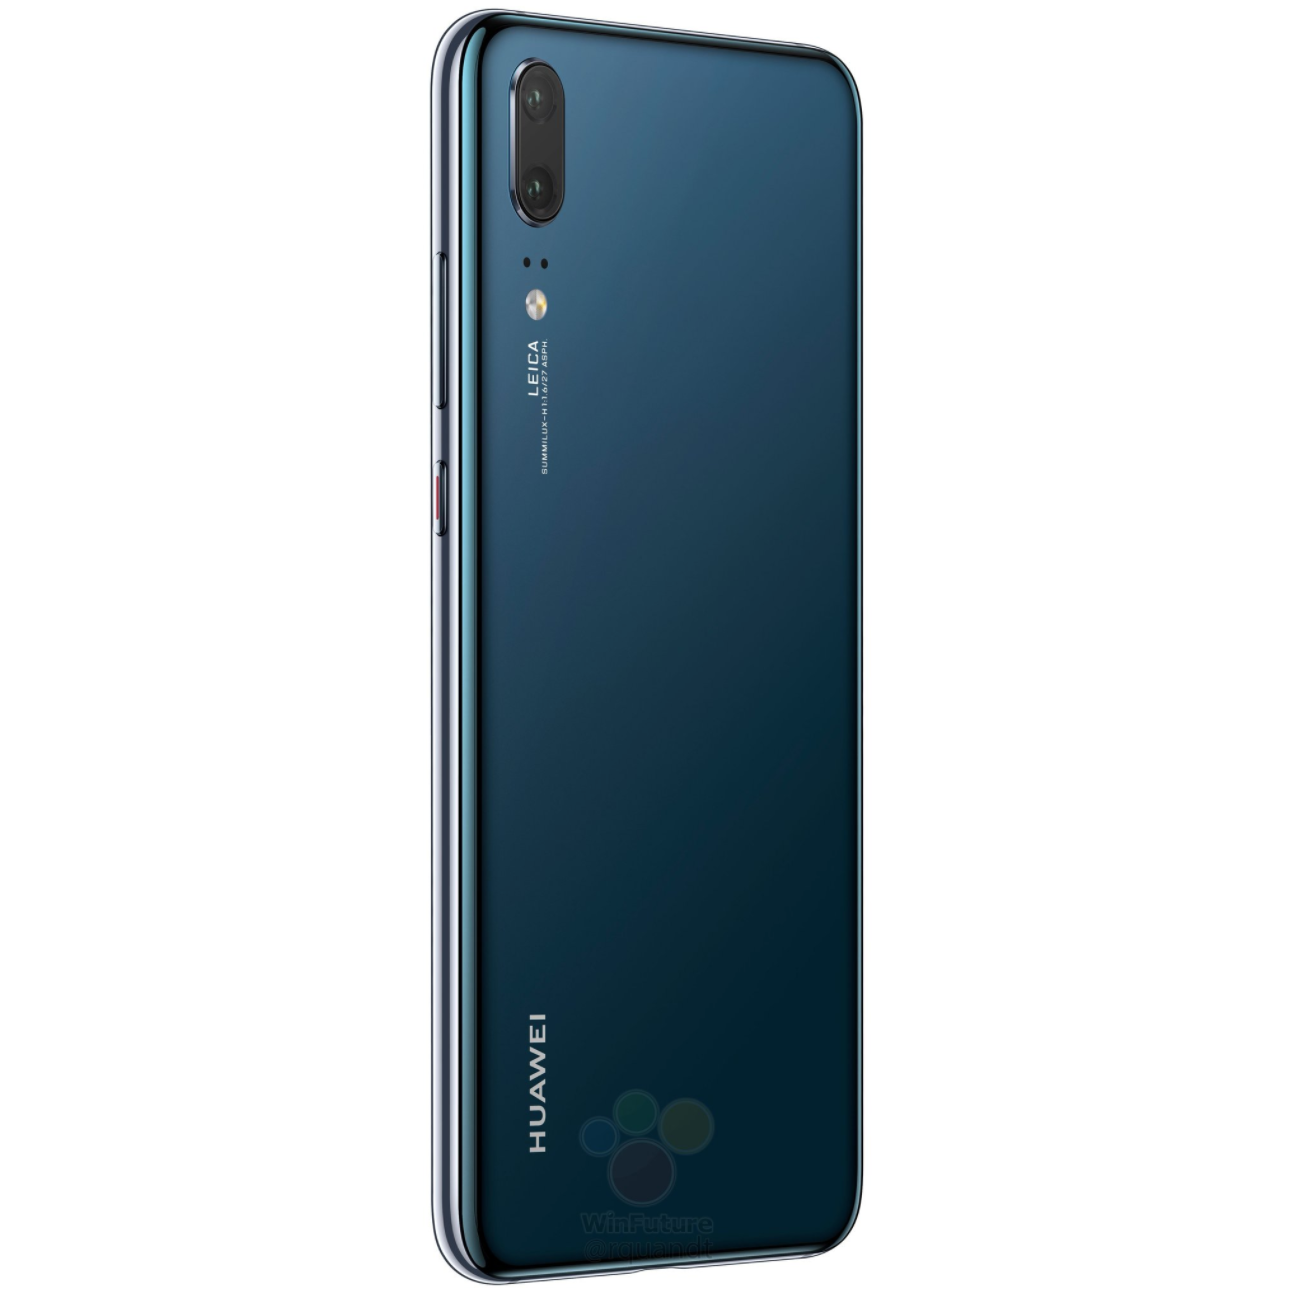 Huawei P20 Press Release SpecPhone 00002